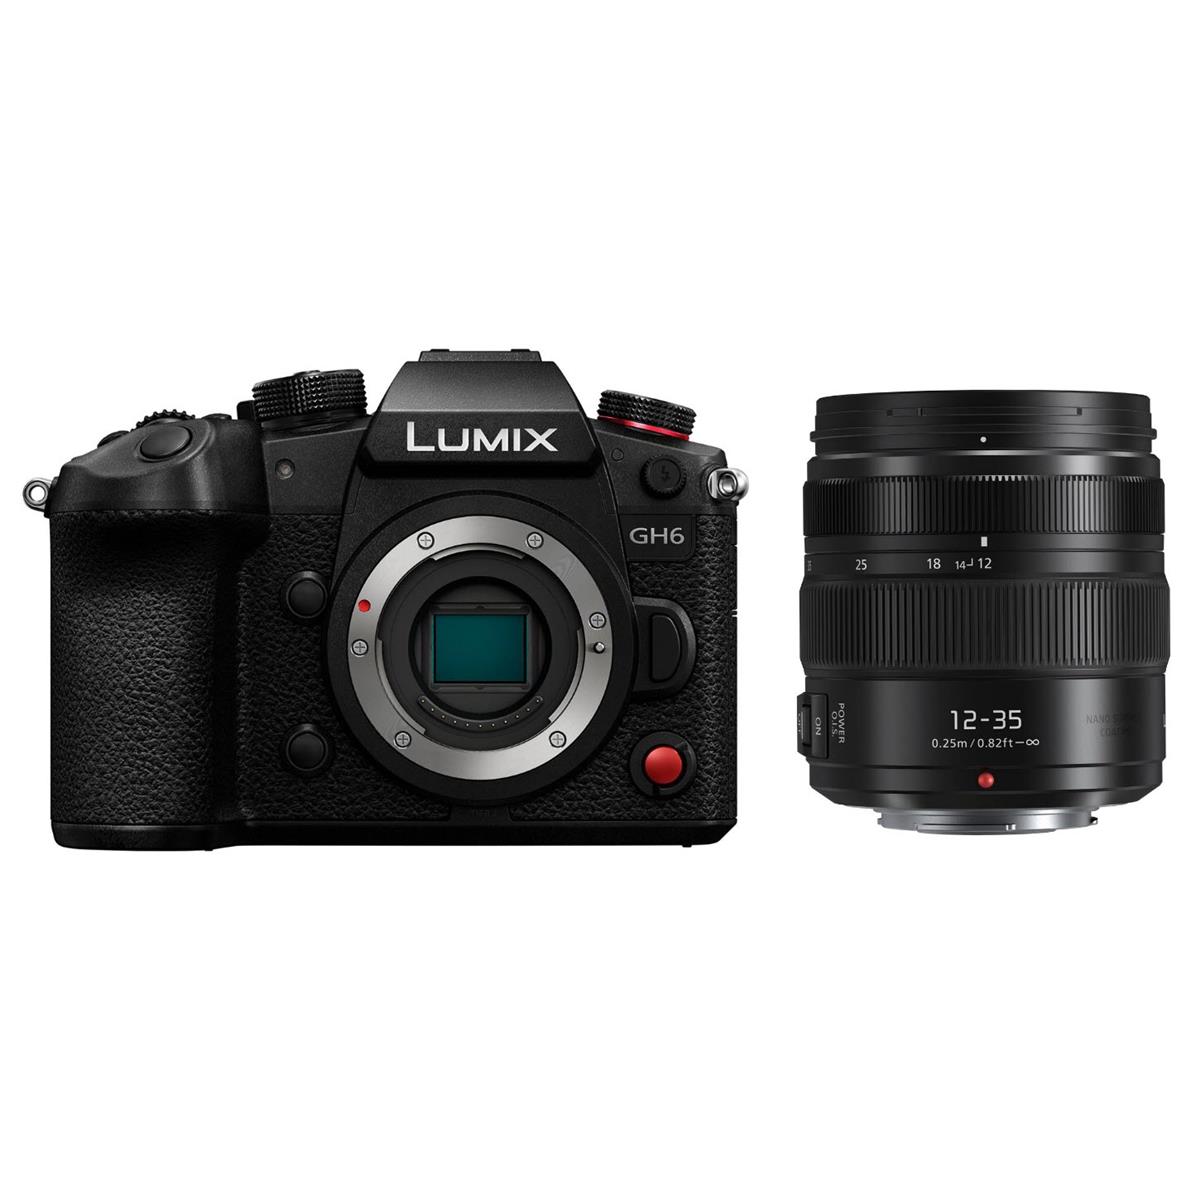 Image of Panasonic Lumix GH6 Mirrorless Camera with G X Vario 12-35mm F/2.8 Lens